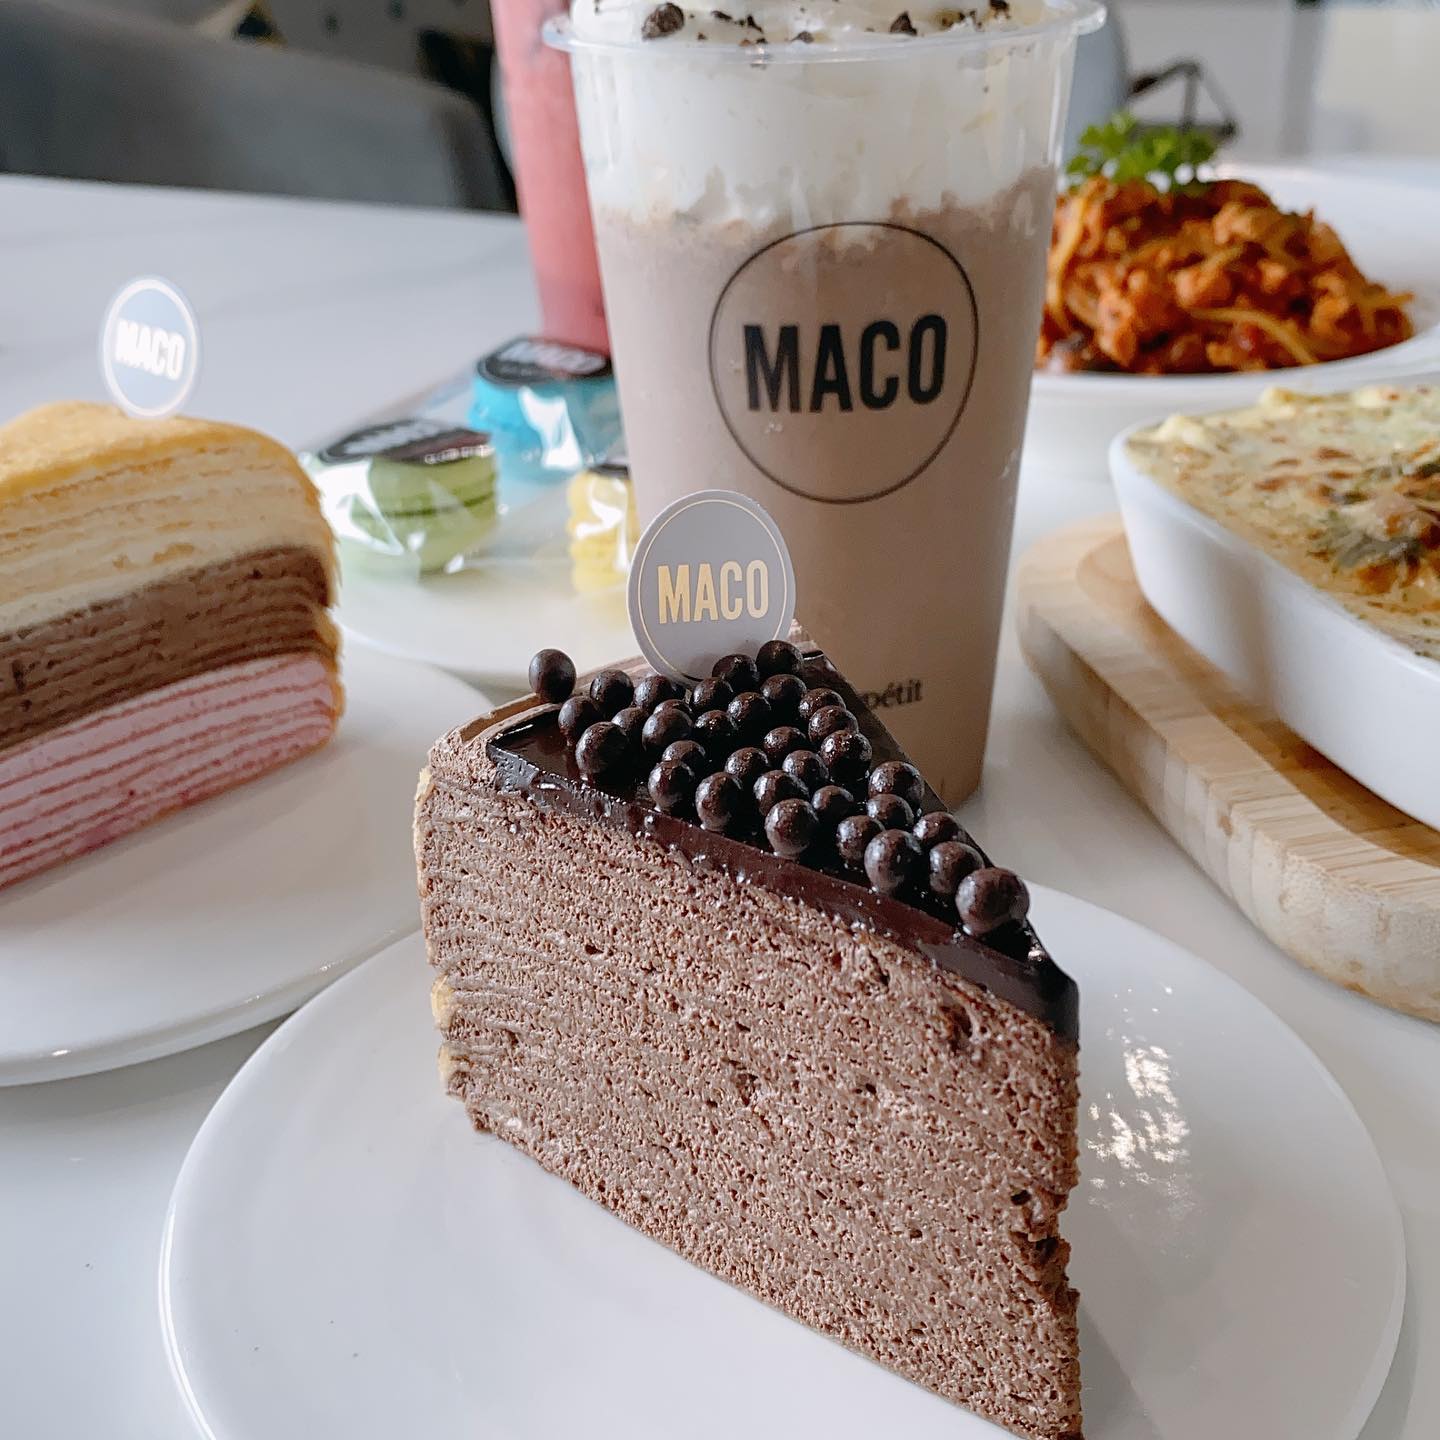 jb cafe guide - Maco Cafe & Bakery